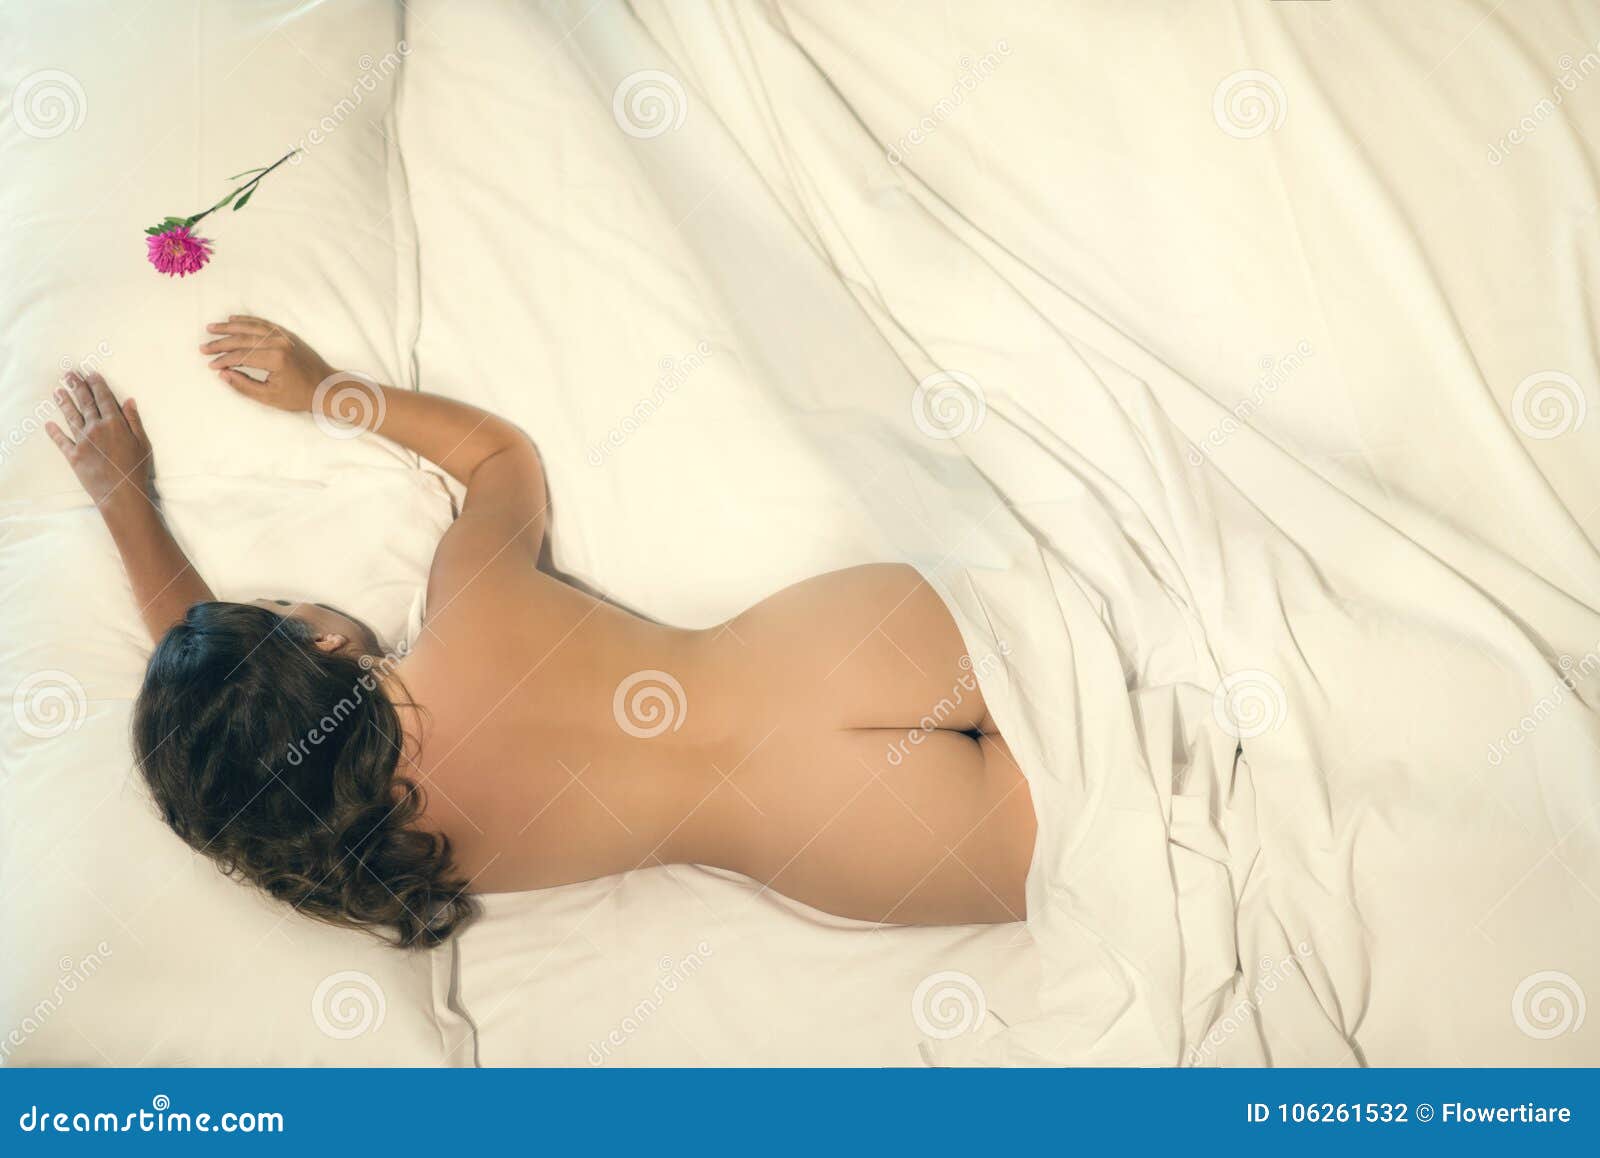 nude girl sleeping in bed